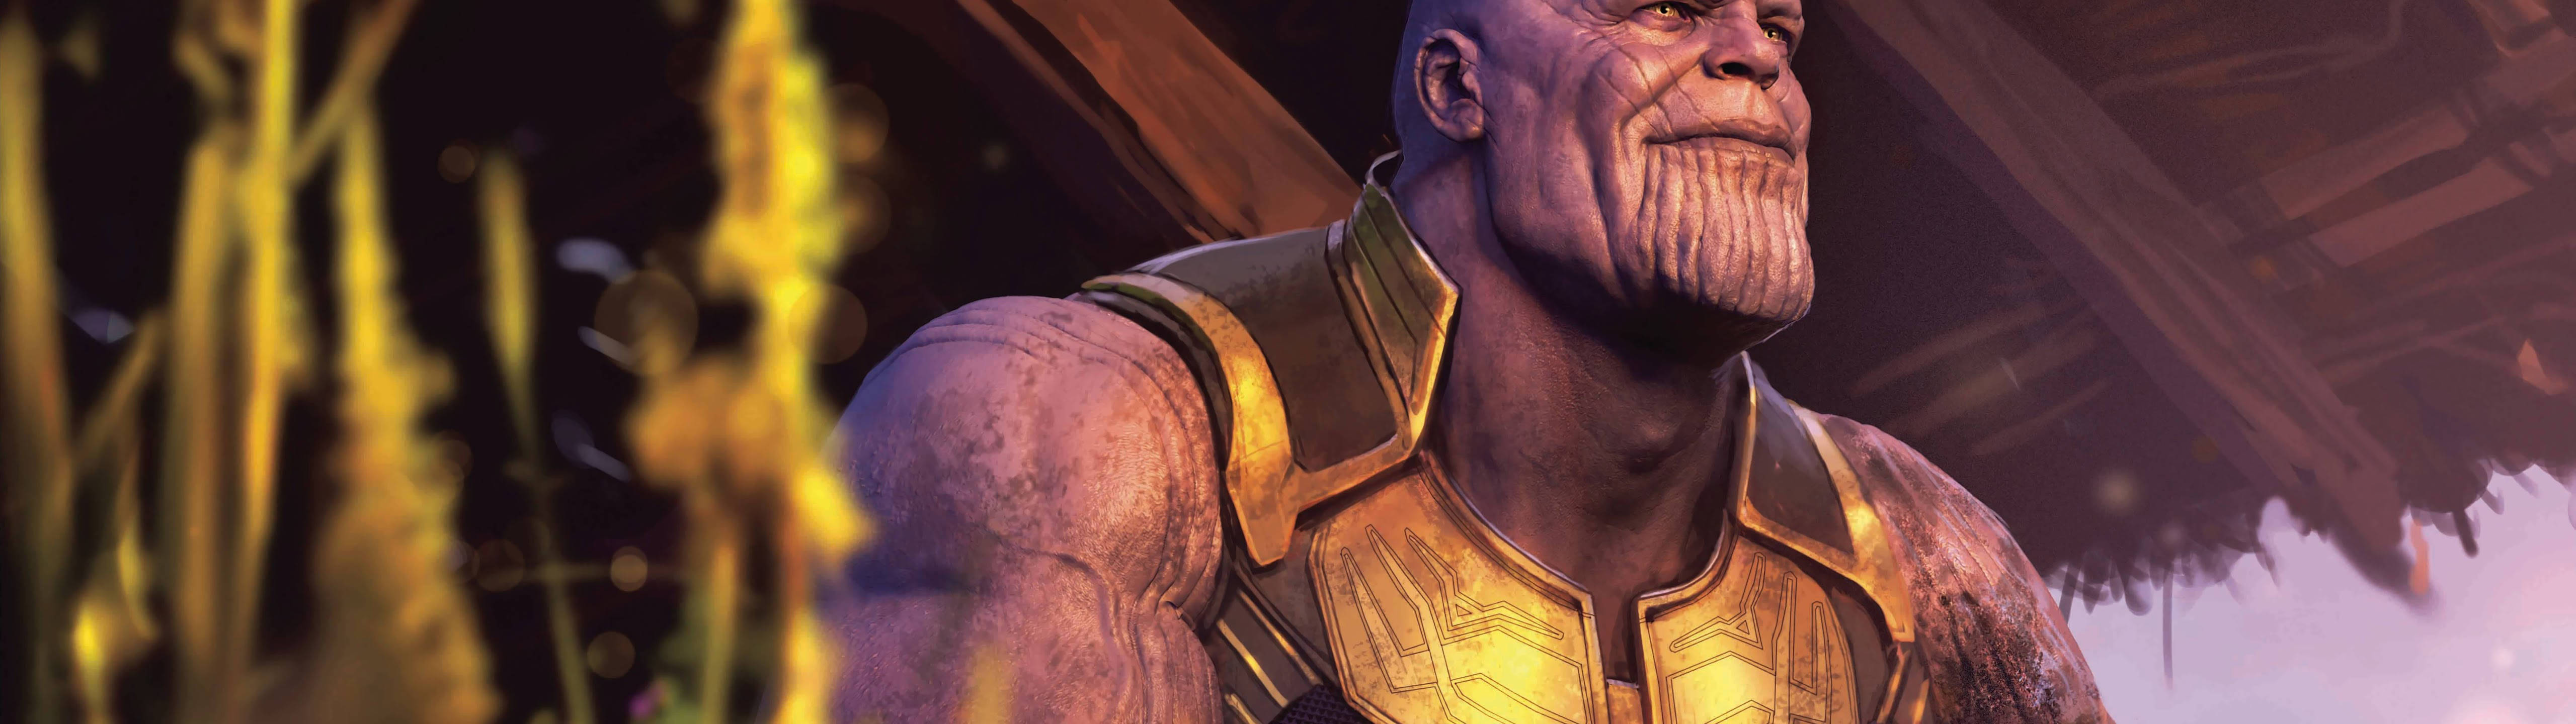 Marvel's Supervillain Thanos 5120 X 1440 Background